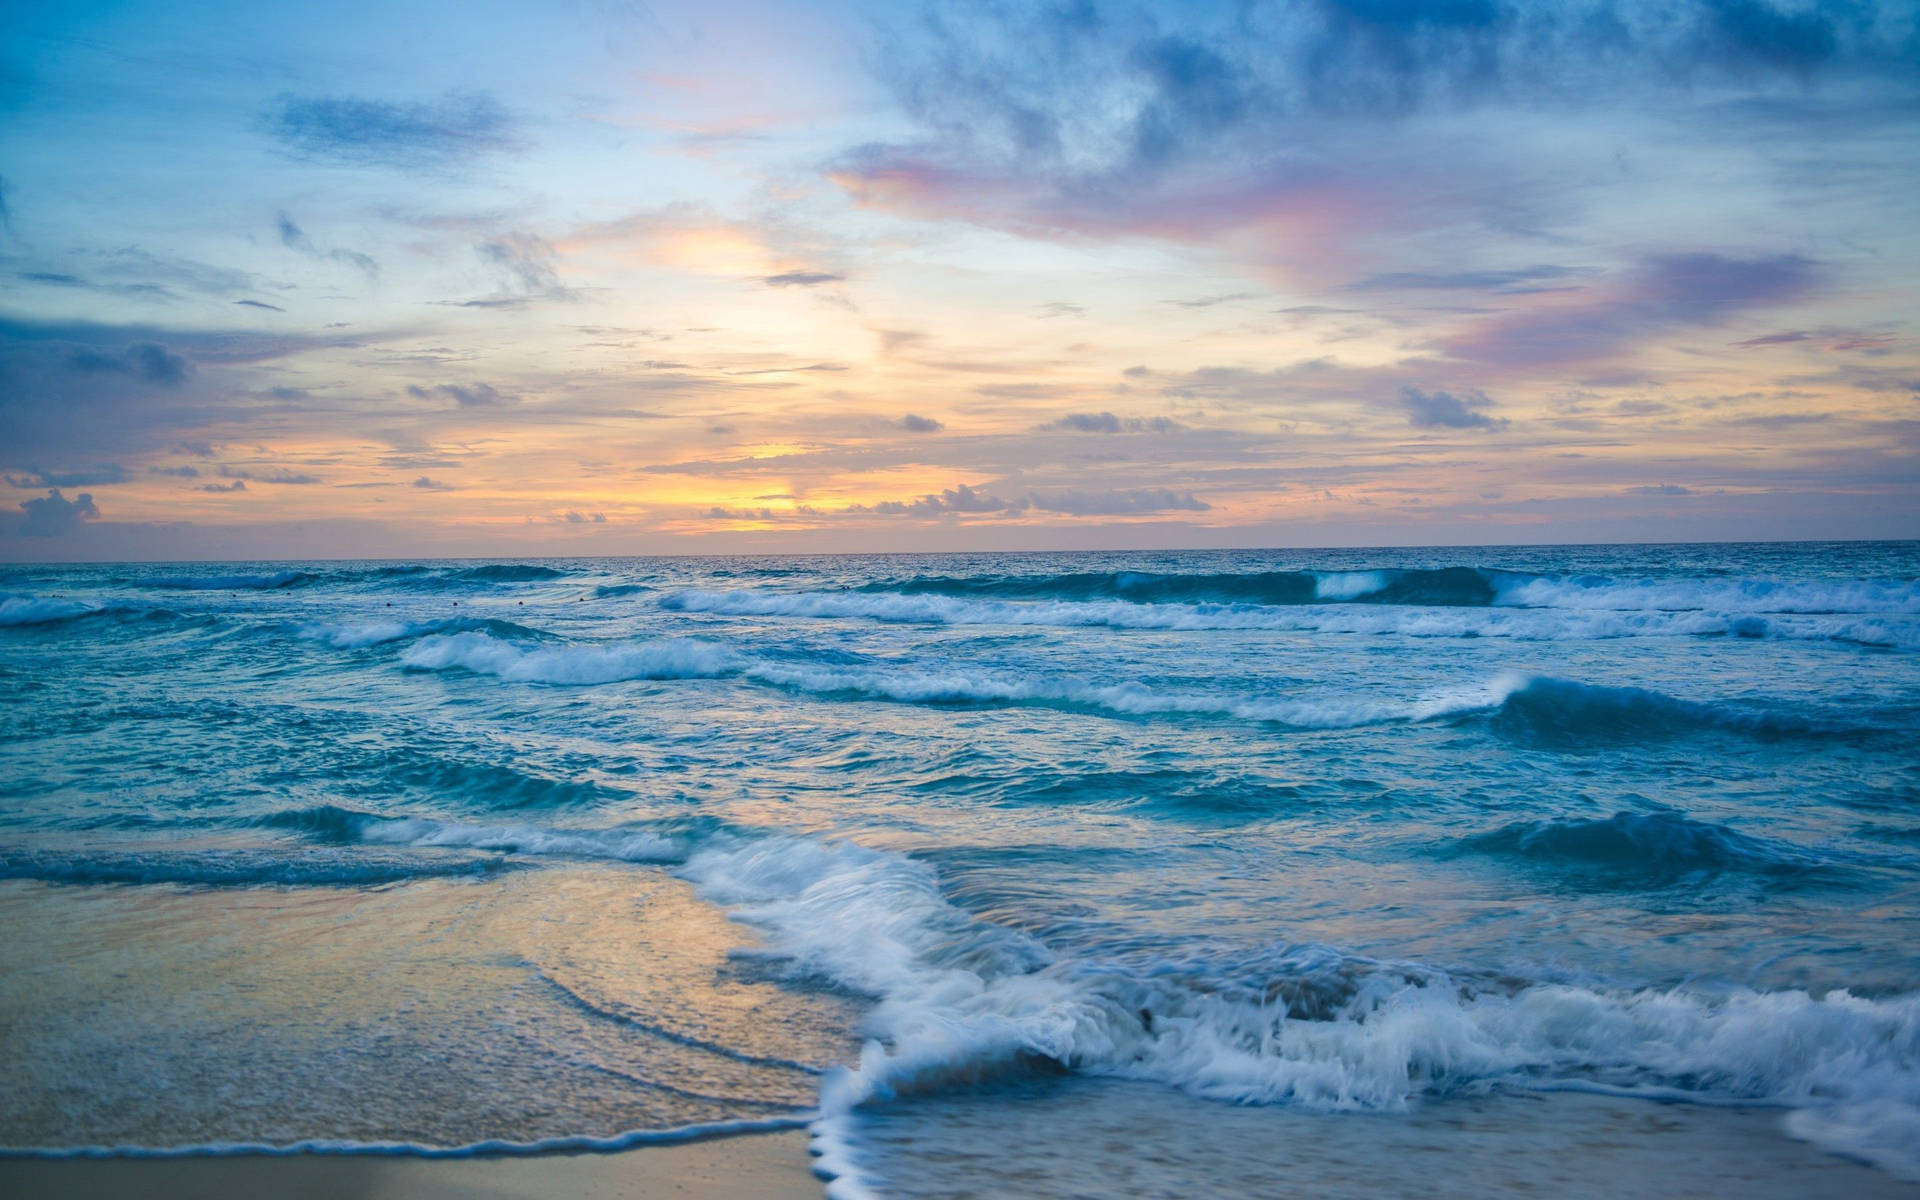 Aesthetic Ocean Waves During Sunset